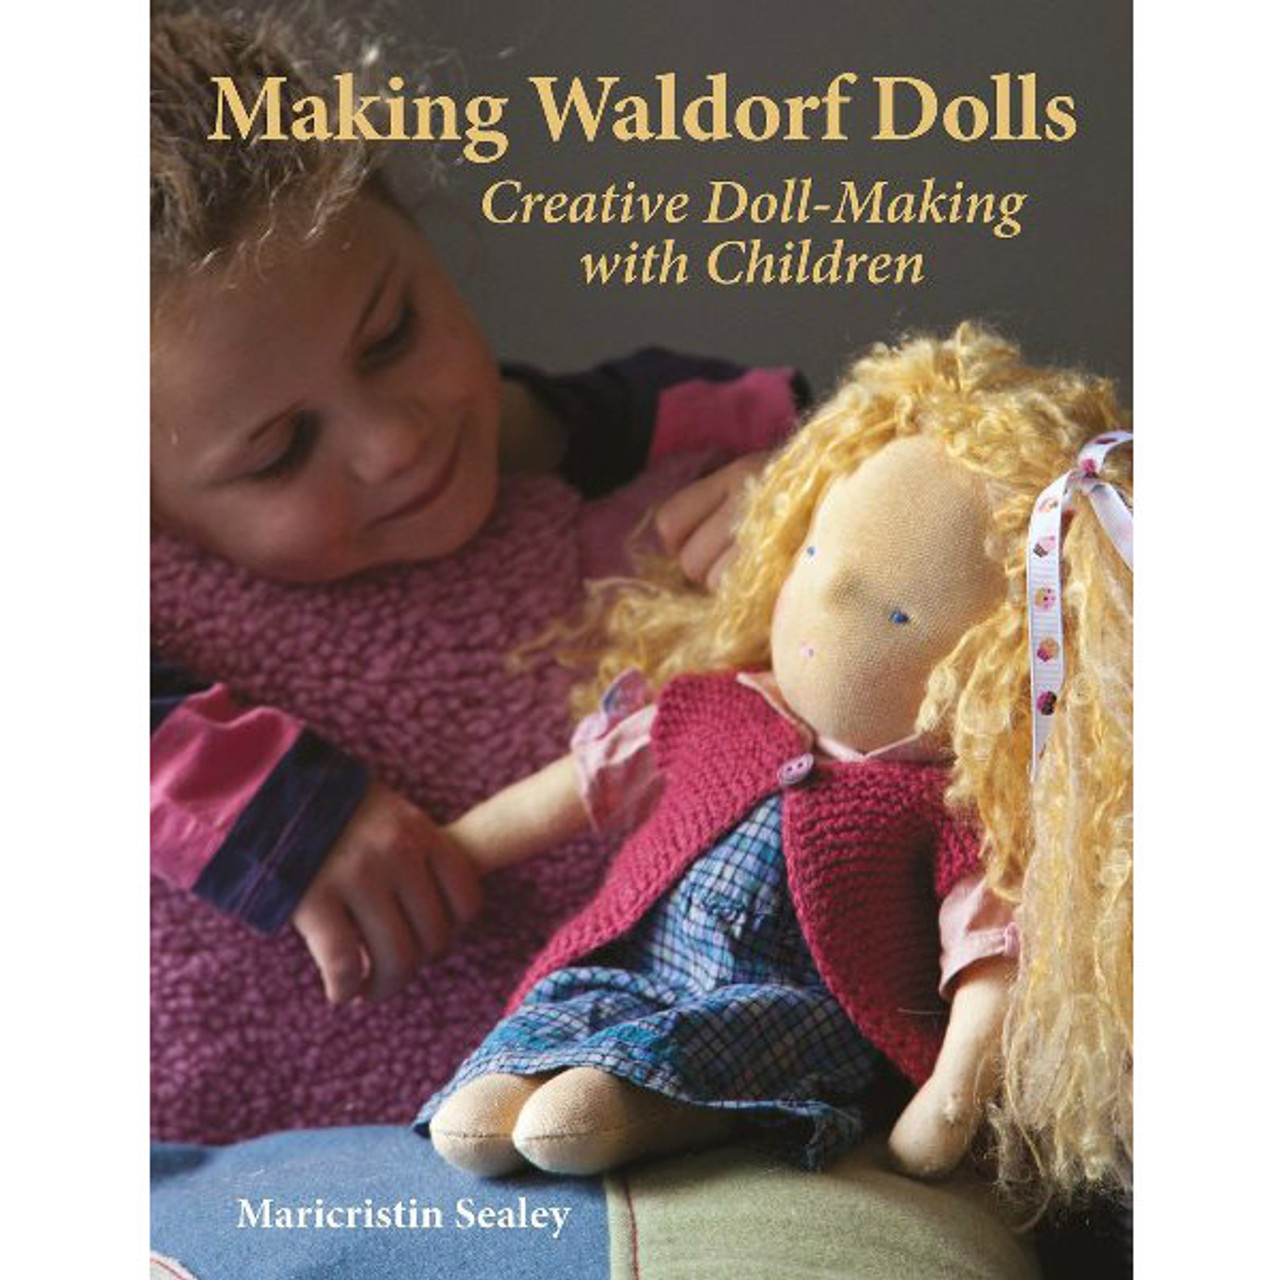 waldorf doll